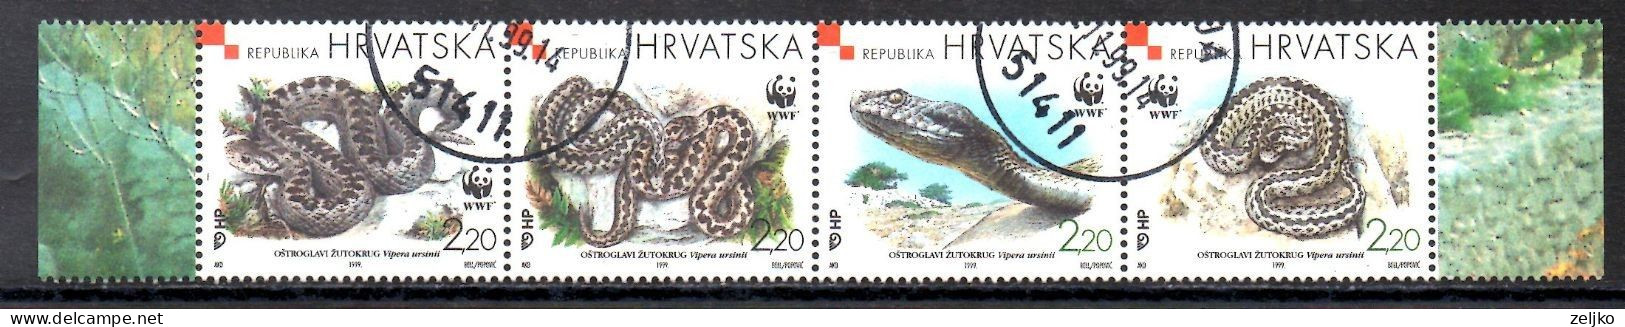 Croatia 1999, Used, Michel 500 - 503, Strip Of 4, Fauna, Snake - Croatia